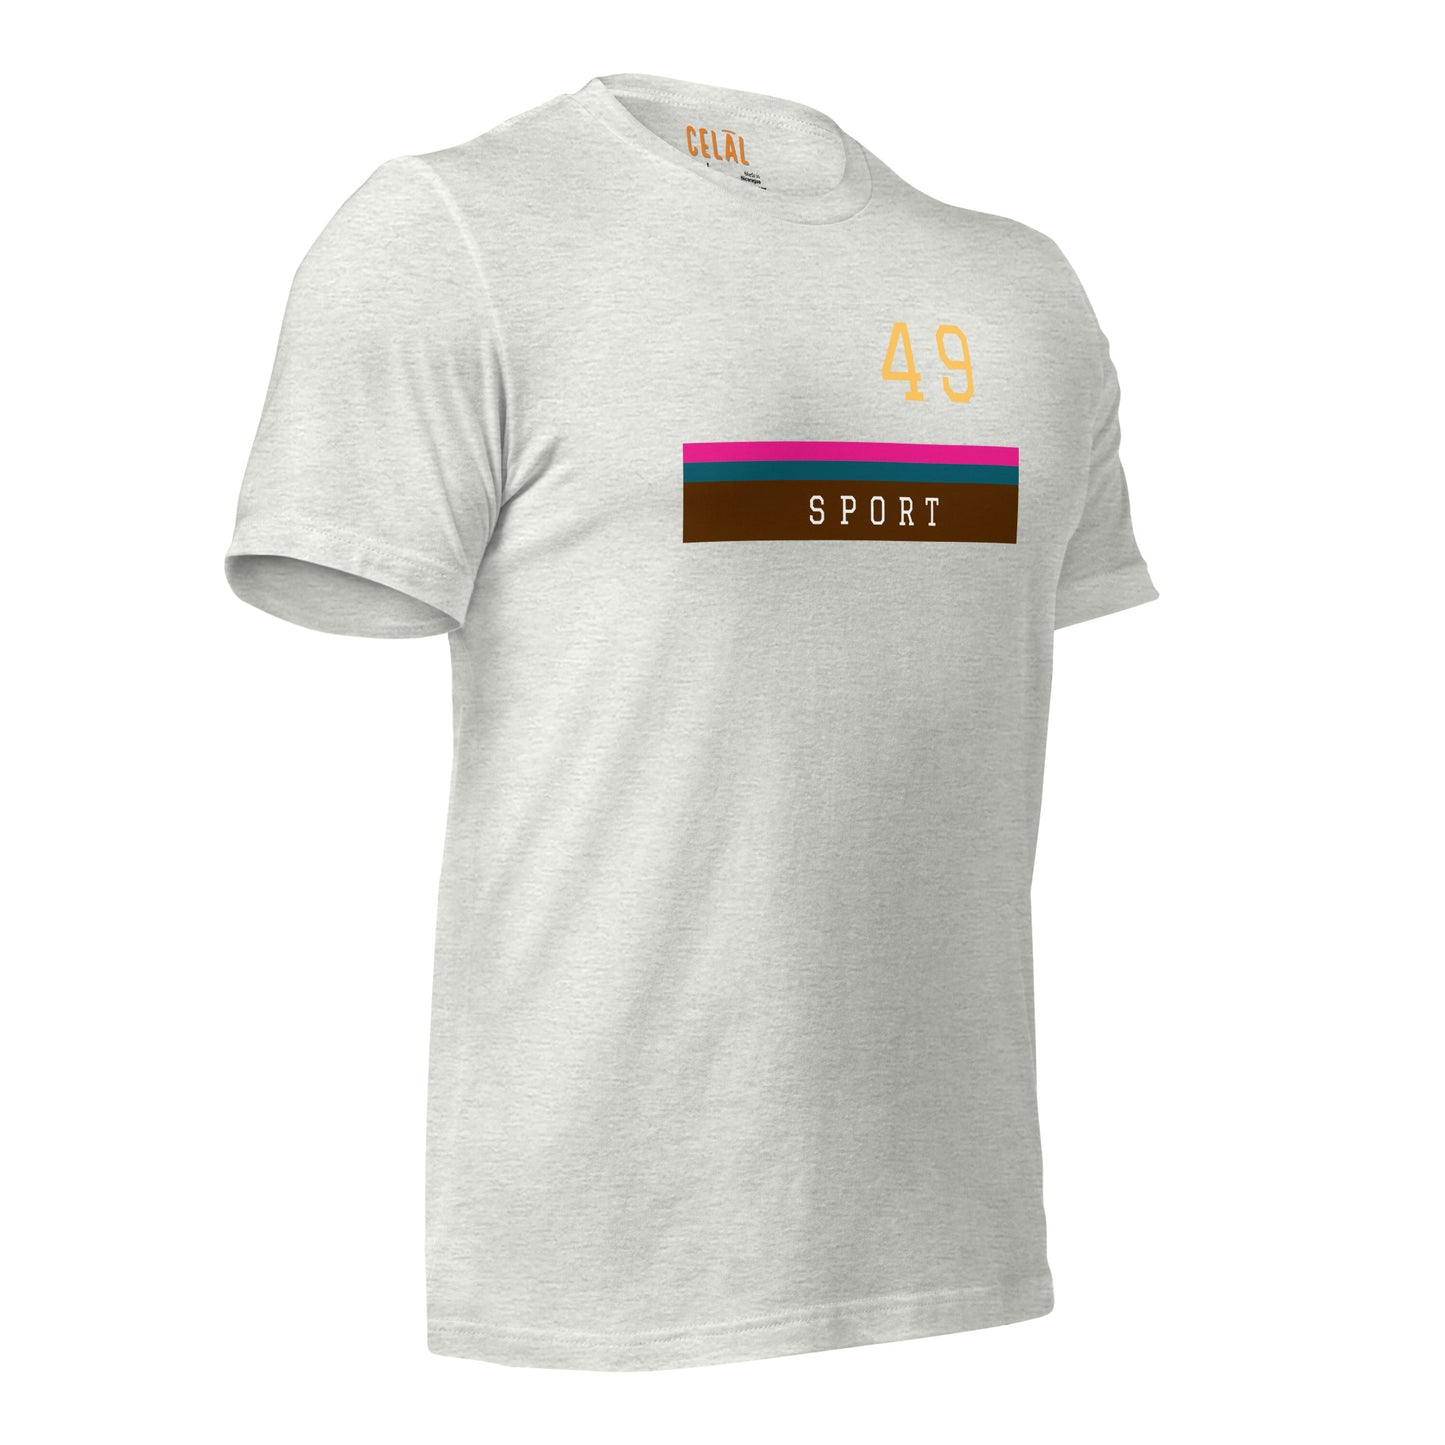 49 Unisex t-shirt